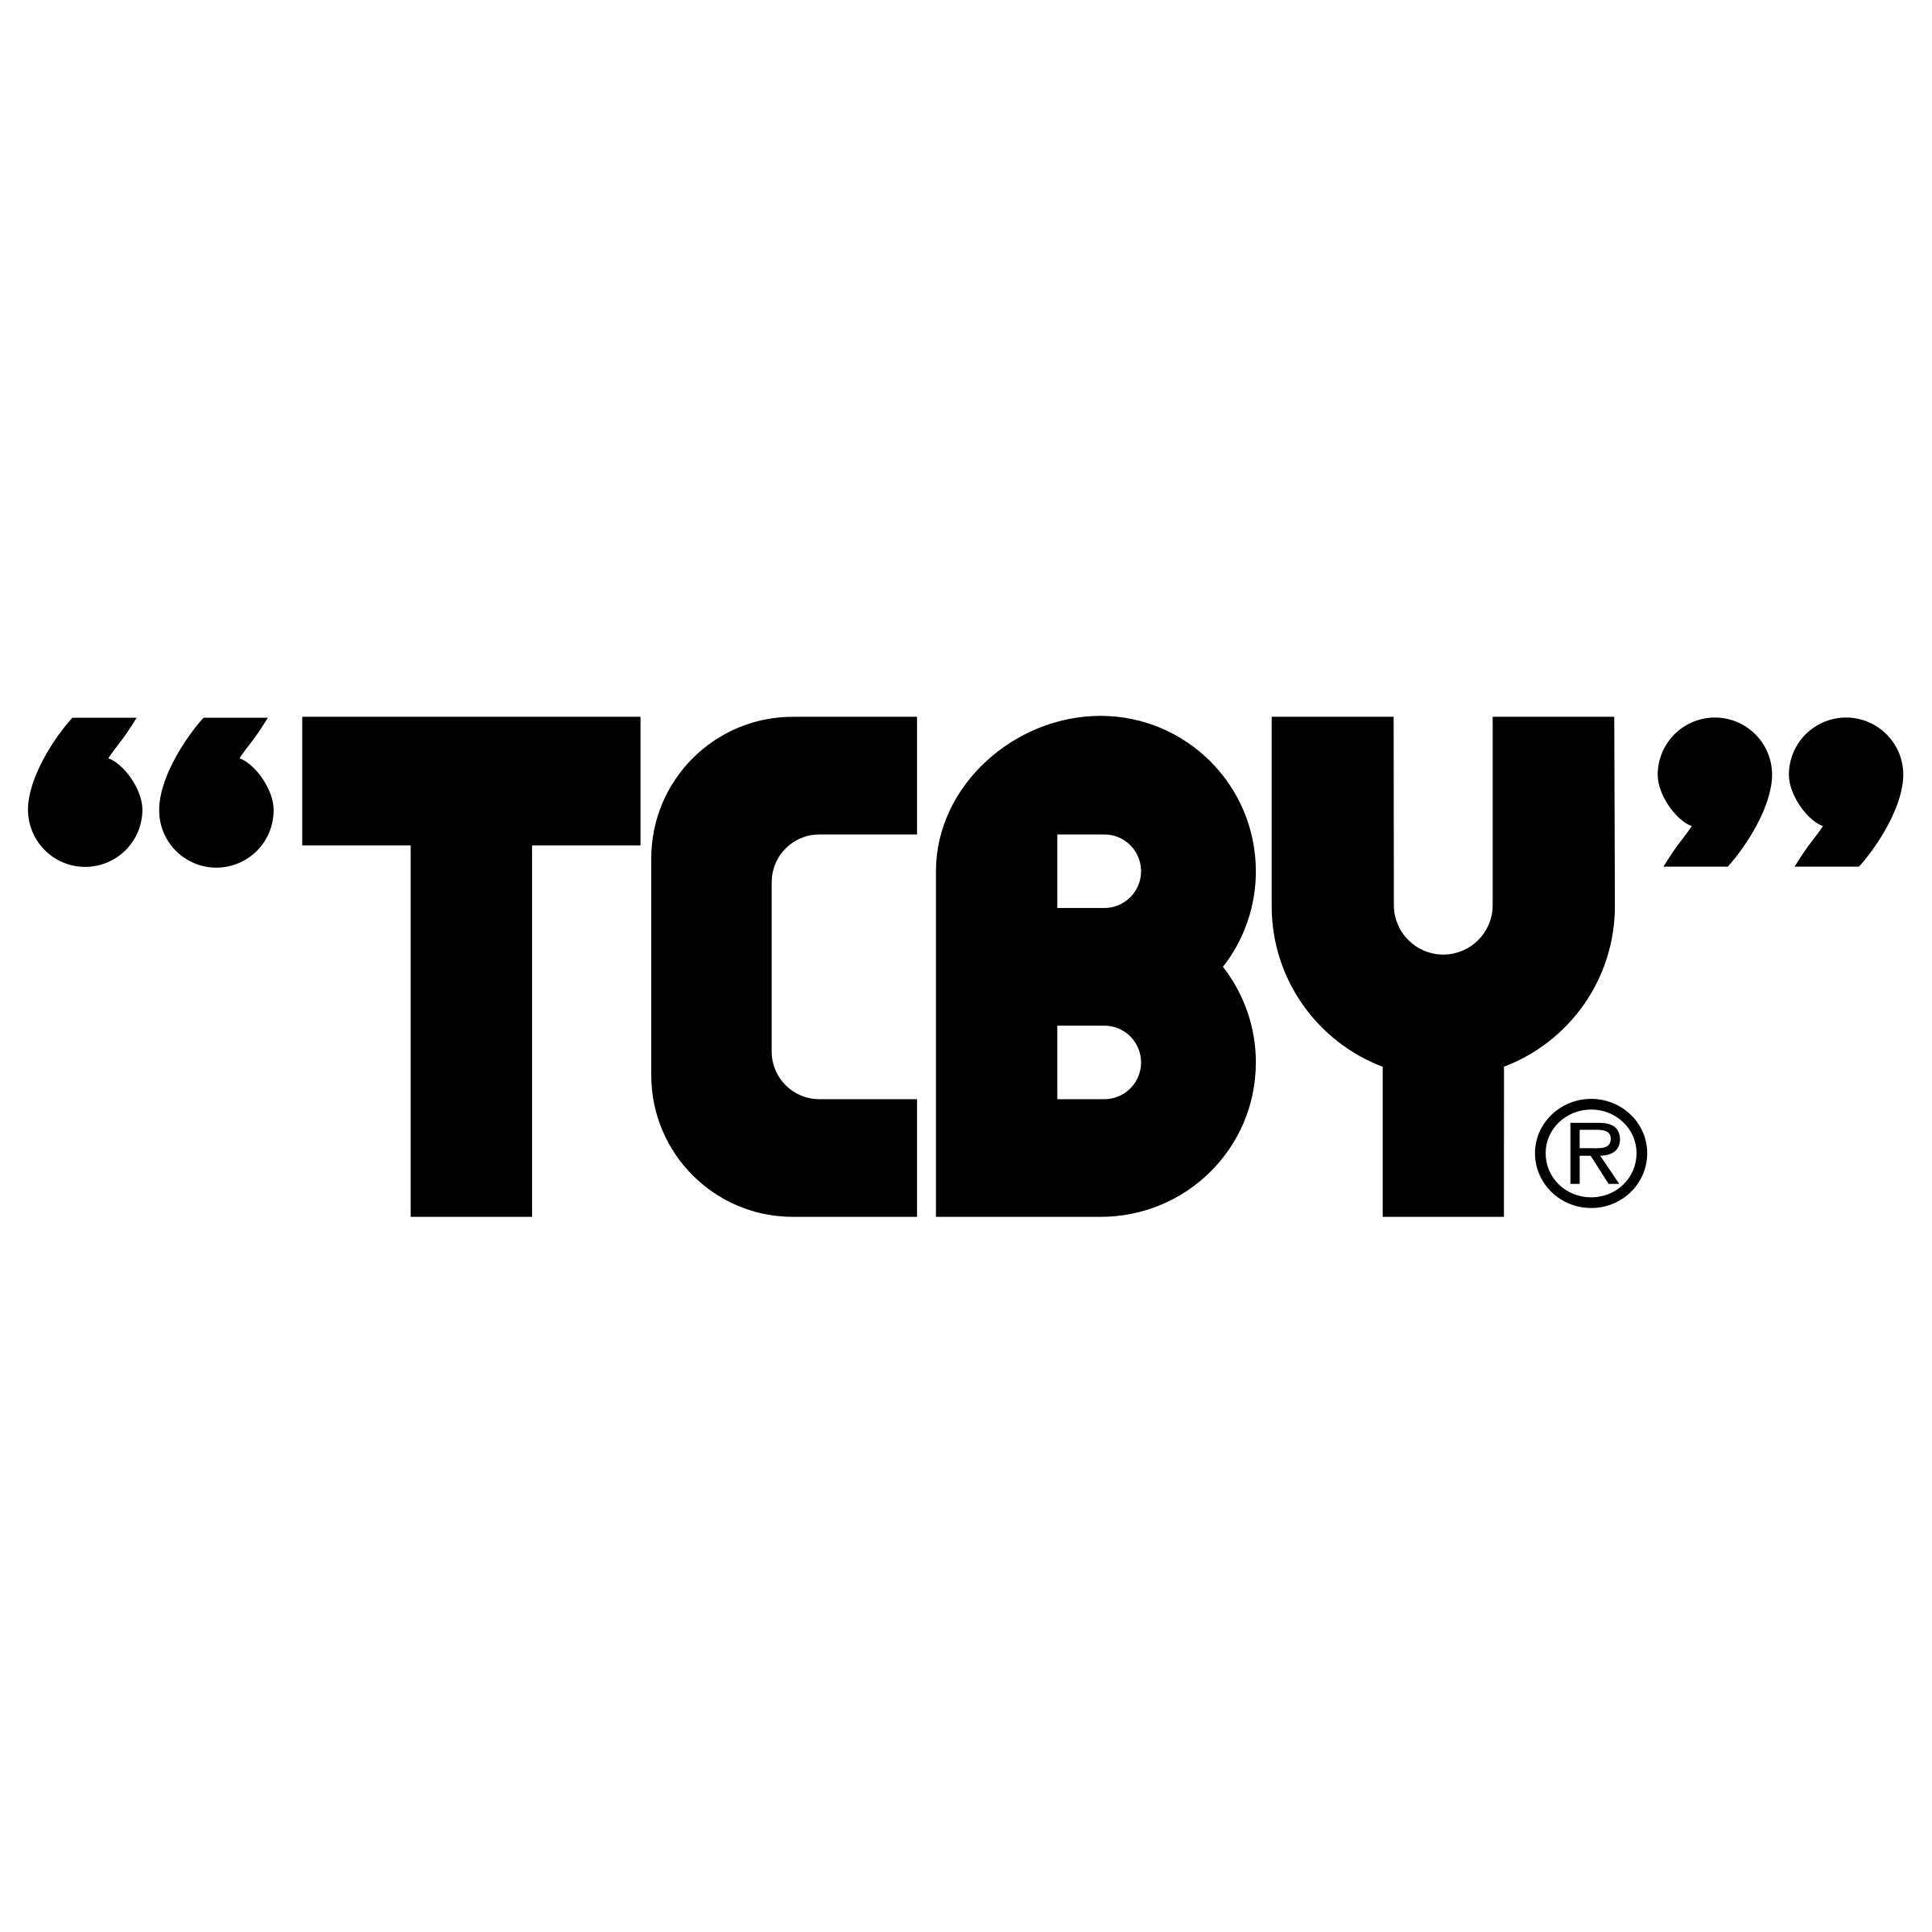 TCBY Logo - TCBY Logo PNG Transparent & SVG Vector